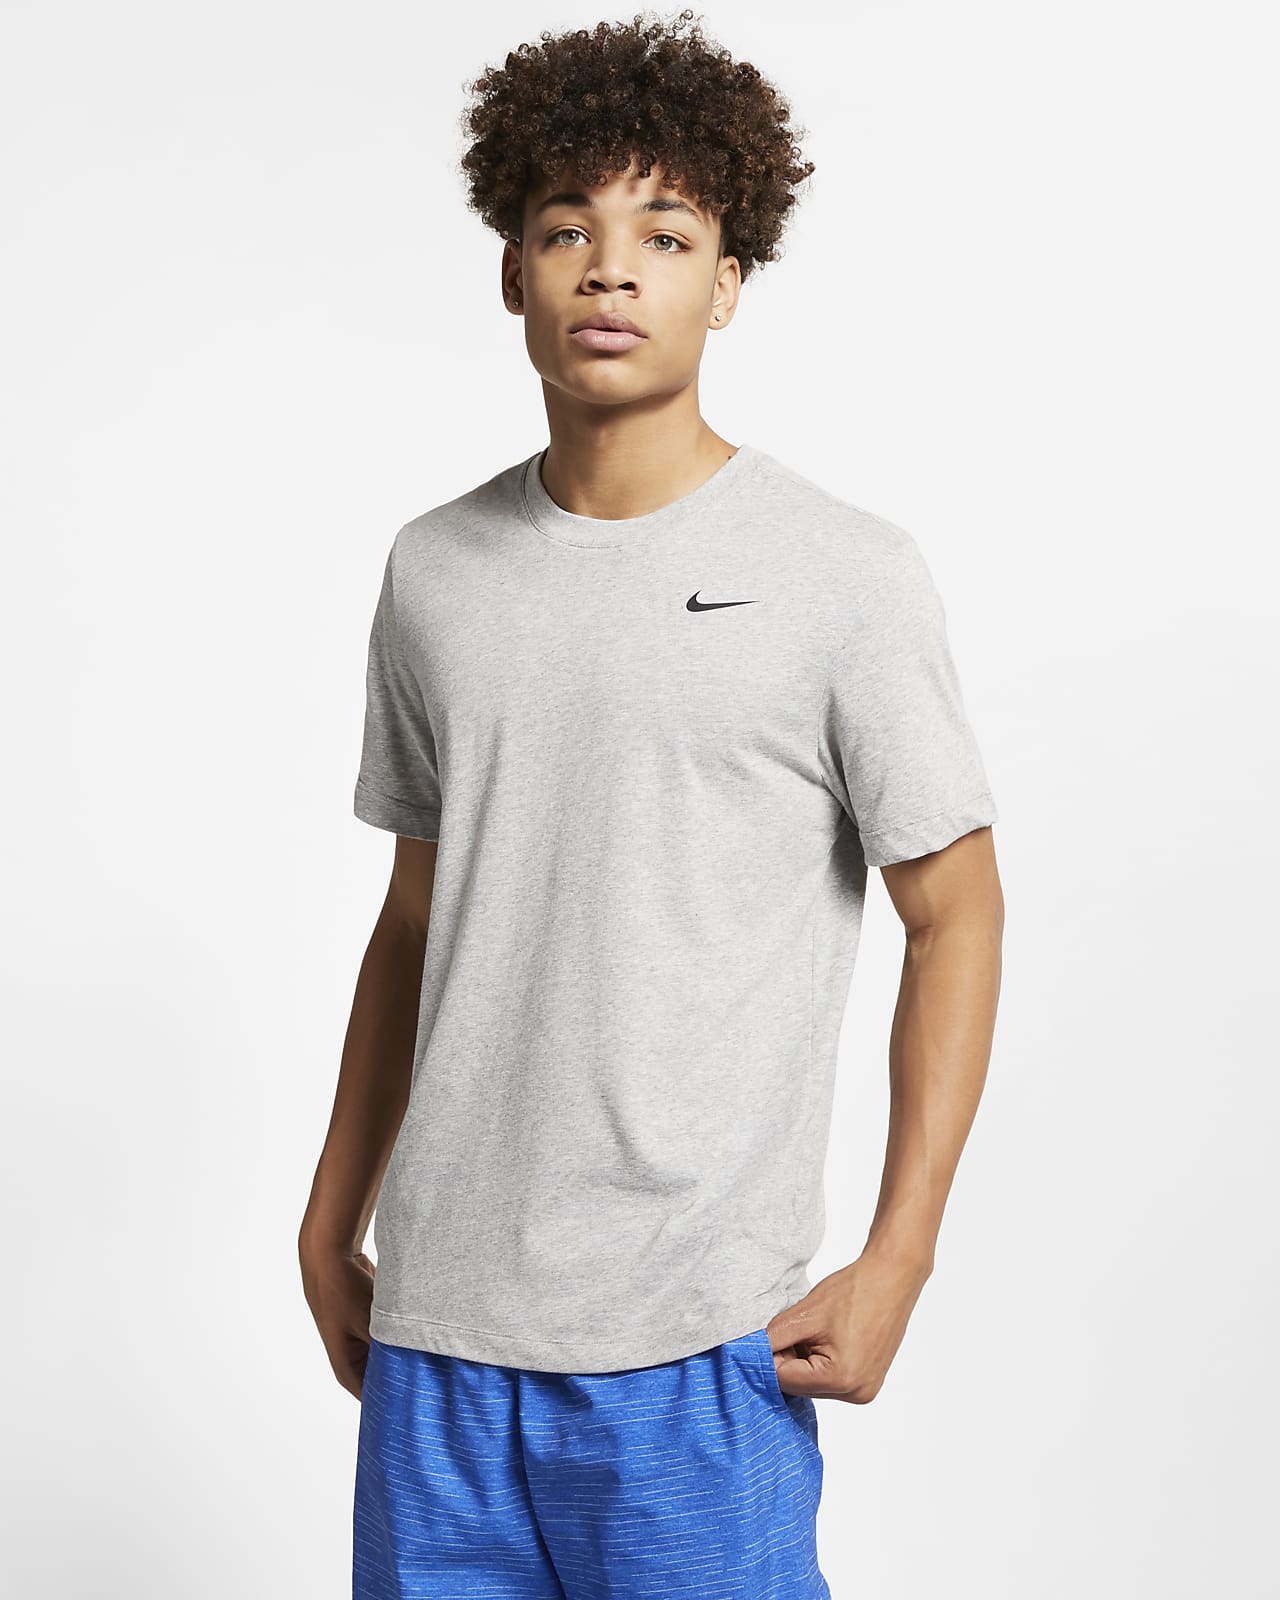 Nike Dri-FIT Trainings-T-Shirt für 